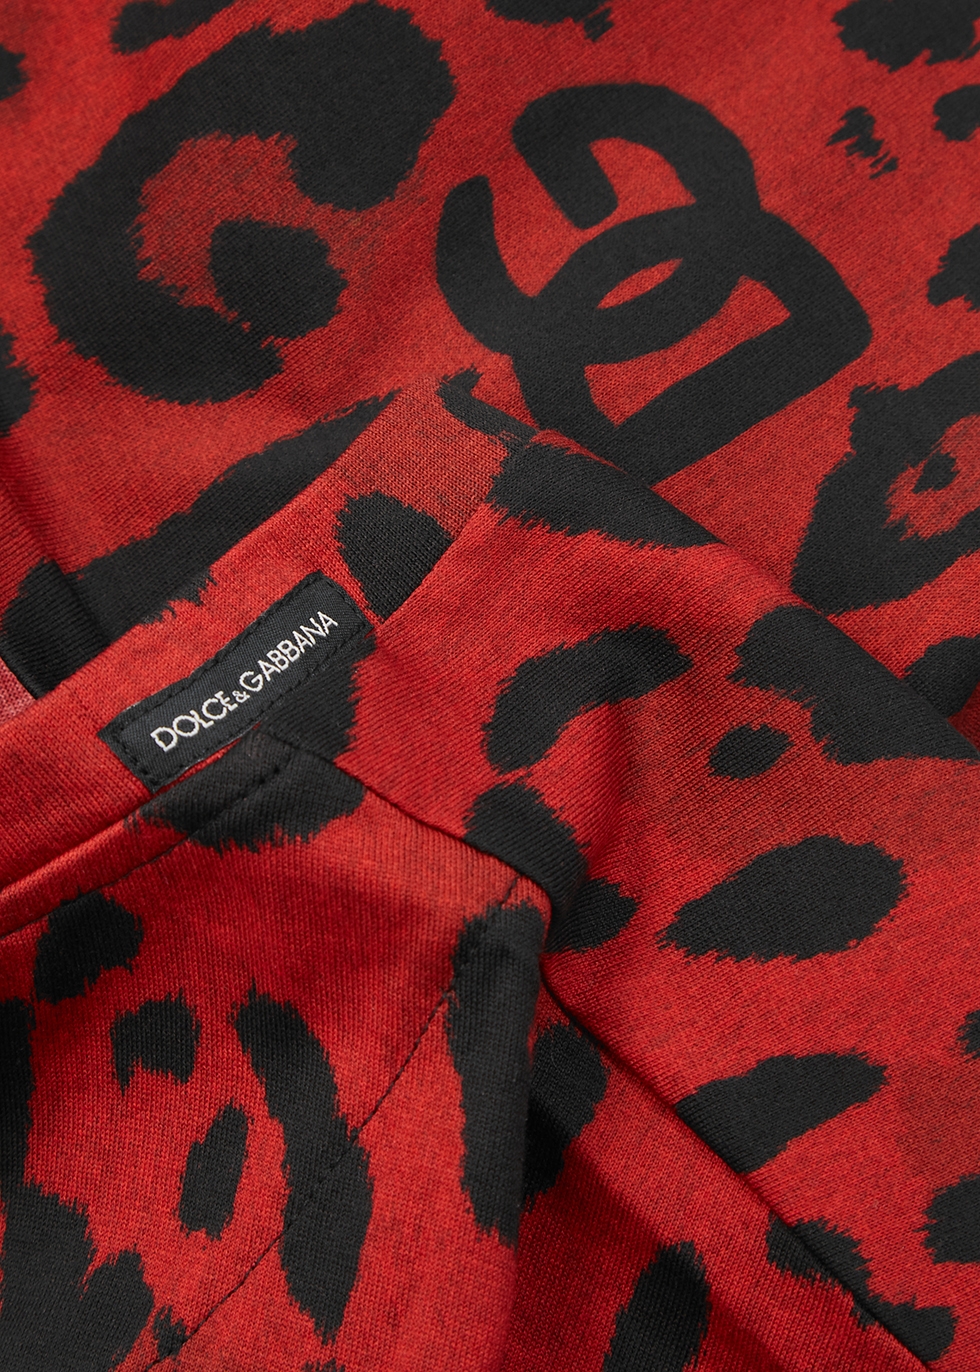 Dolce \u0026 Gabbana Red leopard-print cotton T-shirt - Harvey Nichols